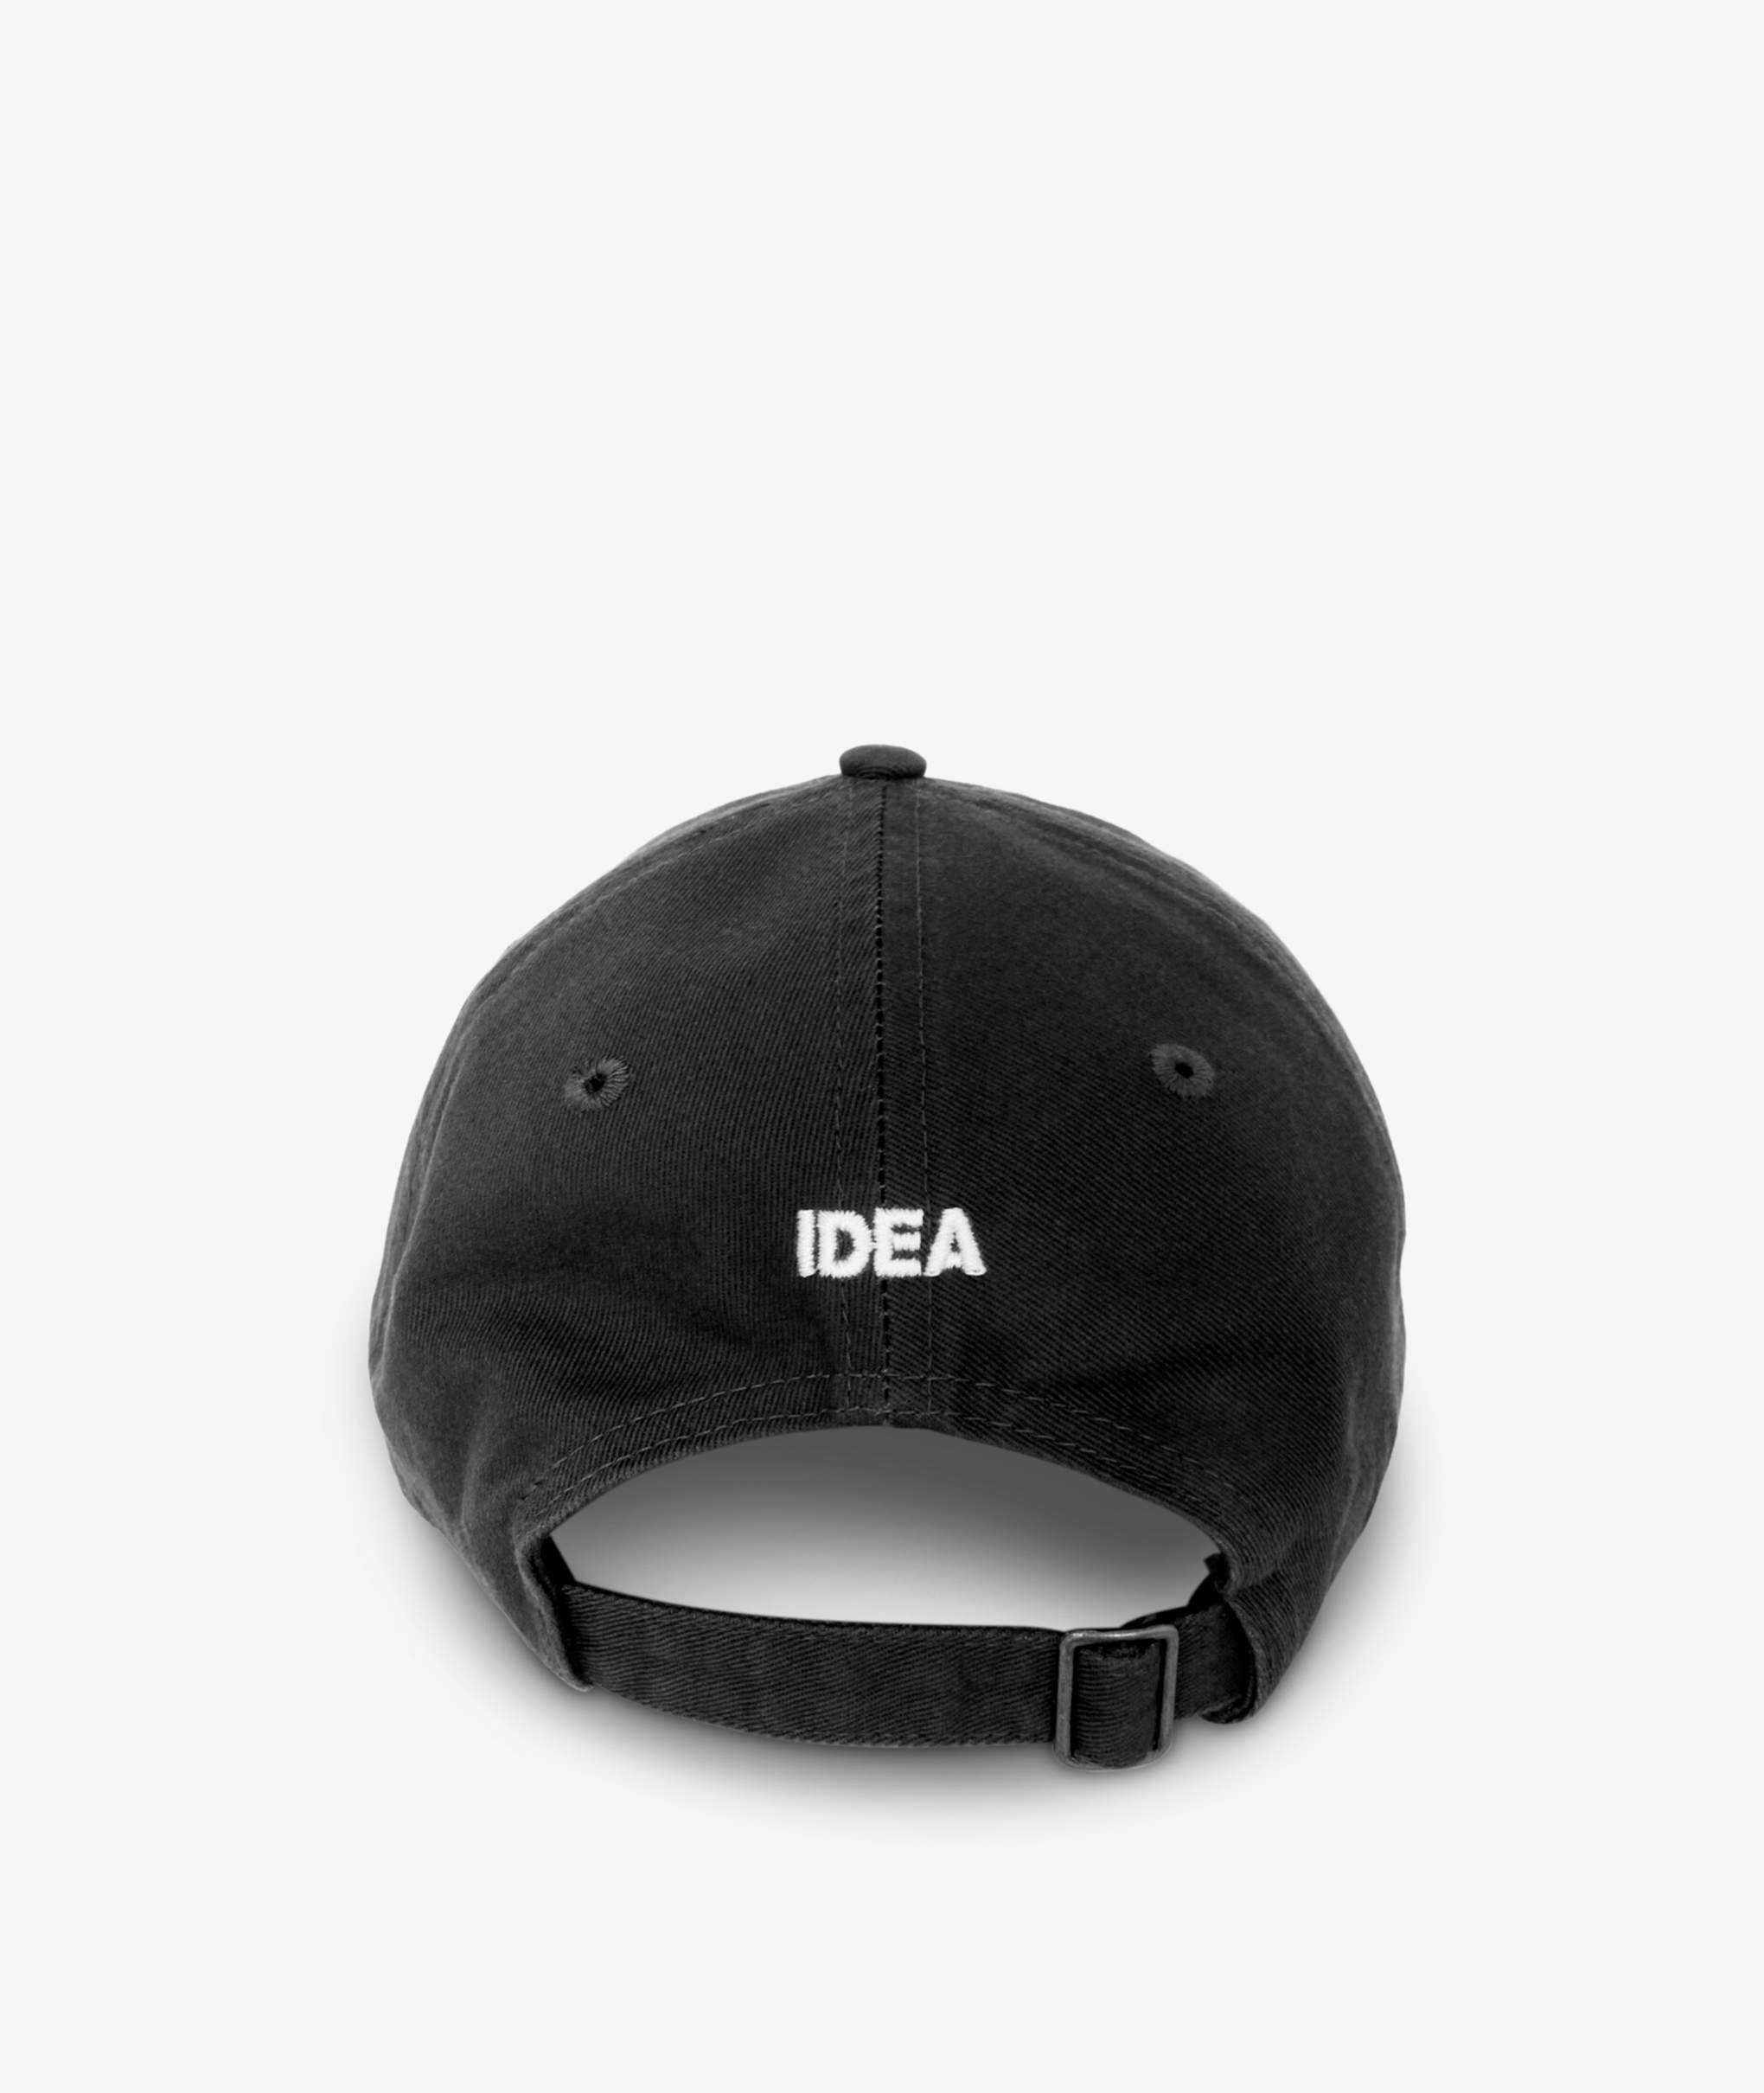 NEW【新品】IDEA BOOKS LTD CAP 『ONE NIGHT ONLY』 帽子